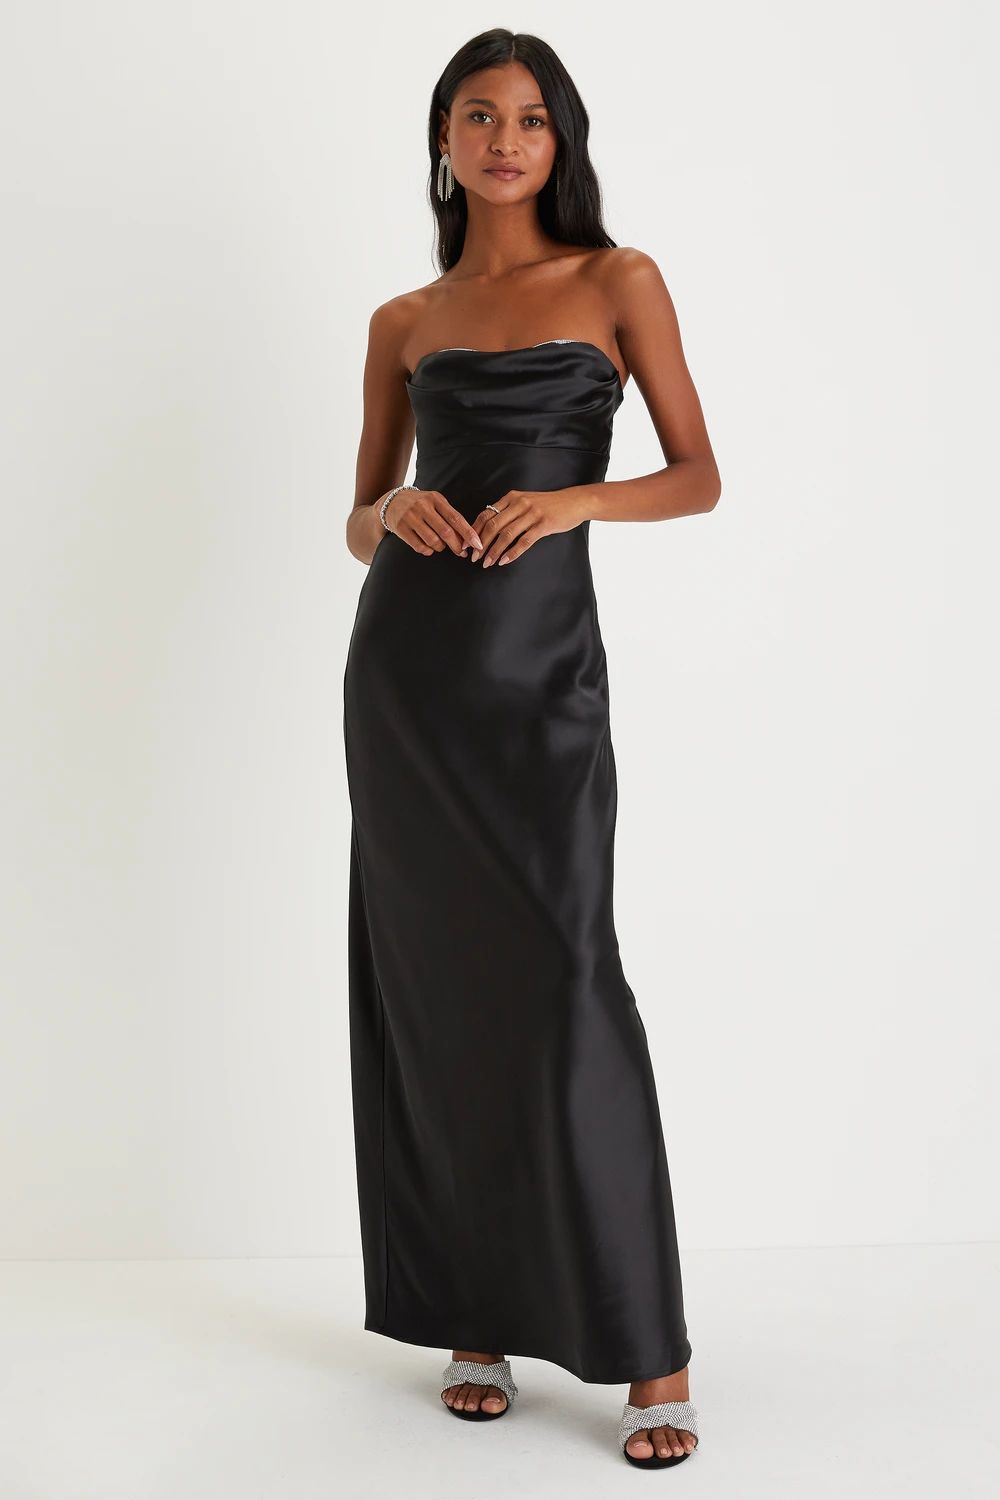 Exquisite Shine Black Satin Rhinestone Strapless Maxi Dress | Lulus (US)